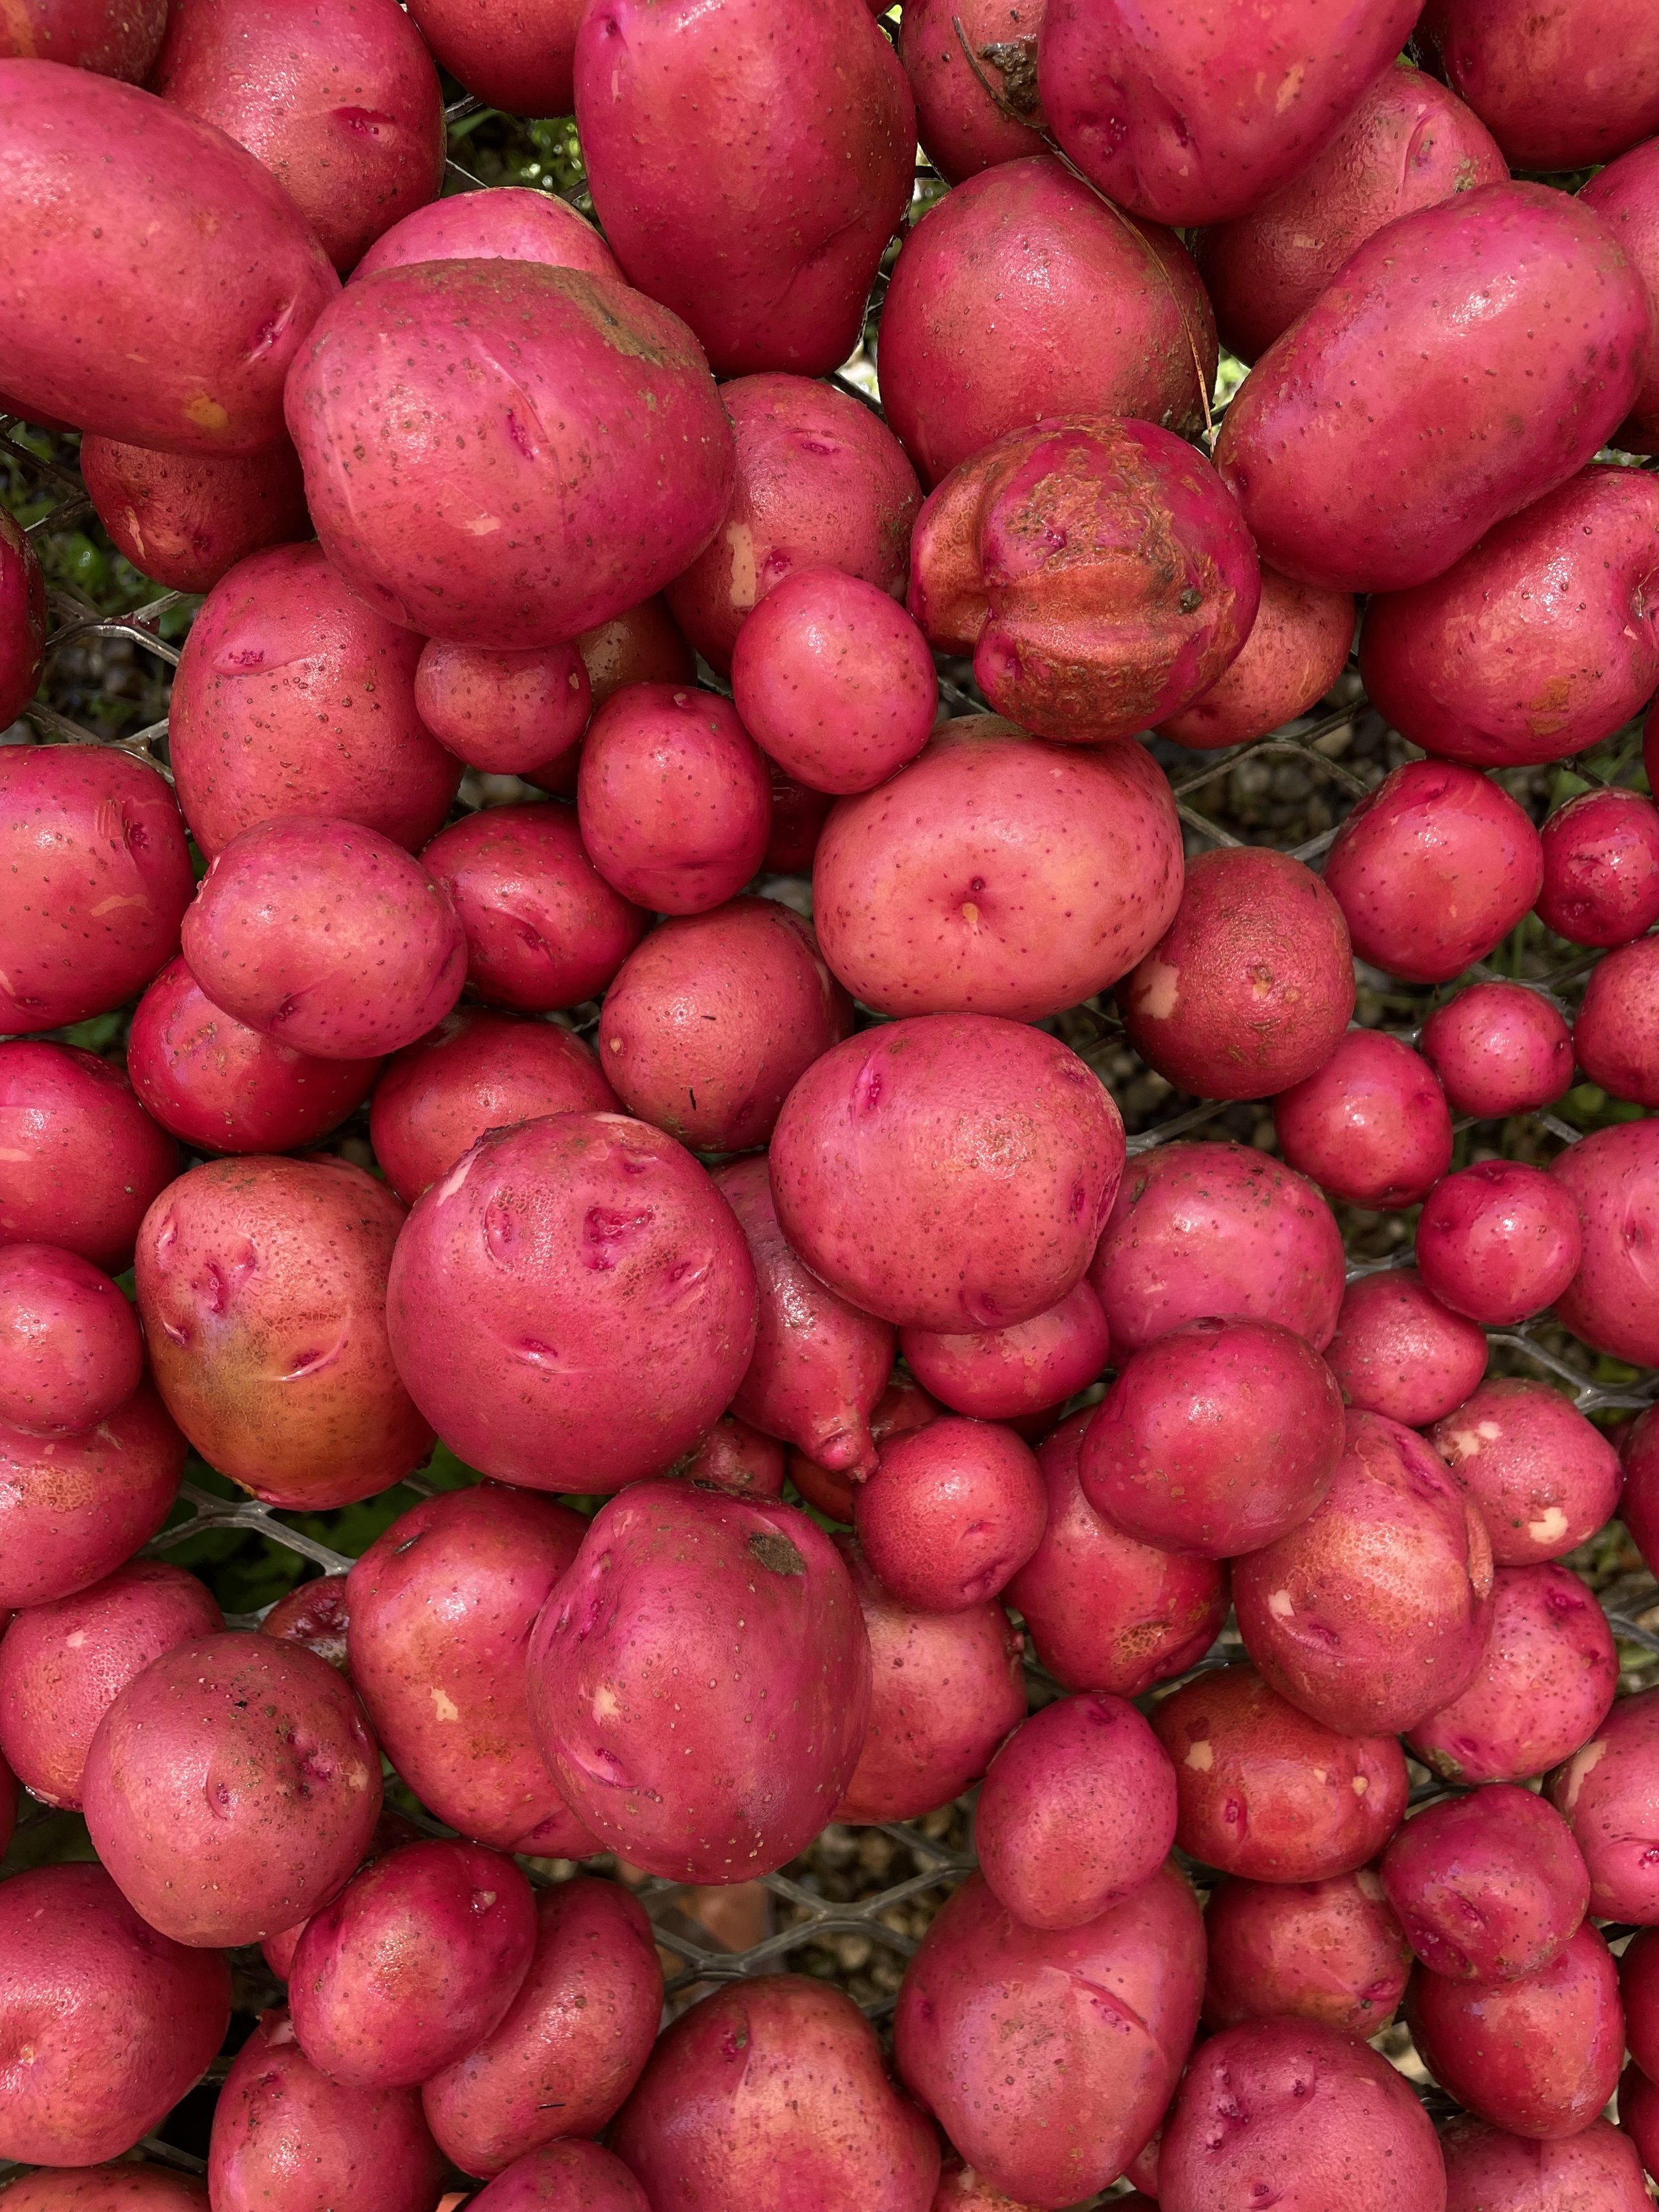 Red Potatoes 22.jpg